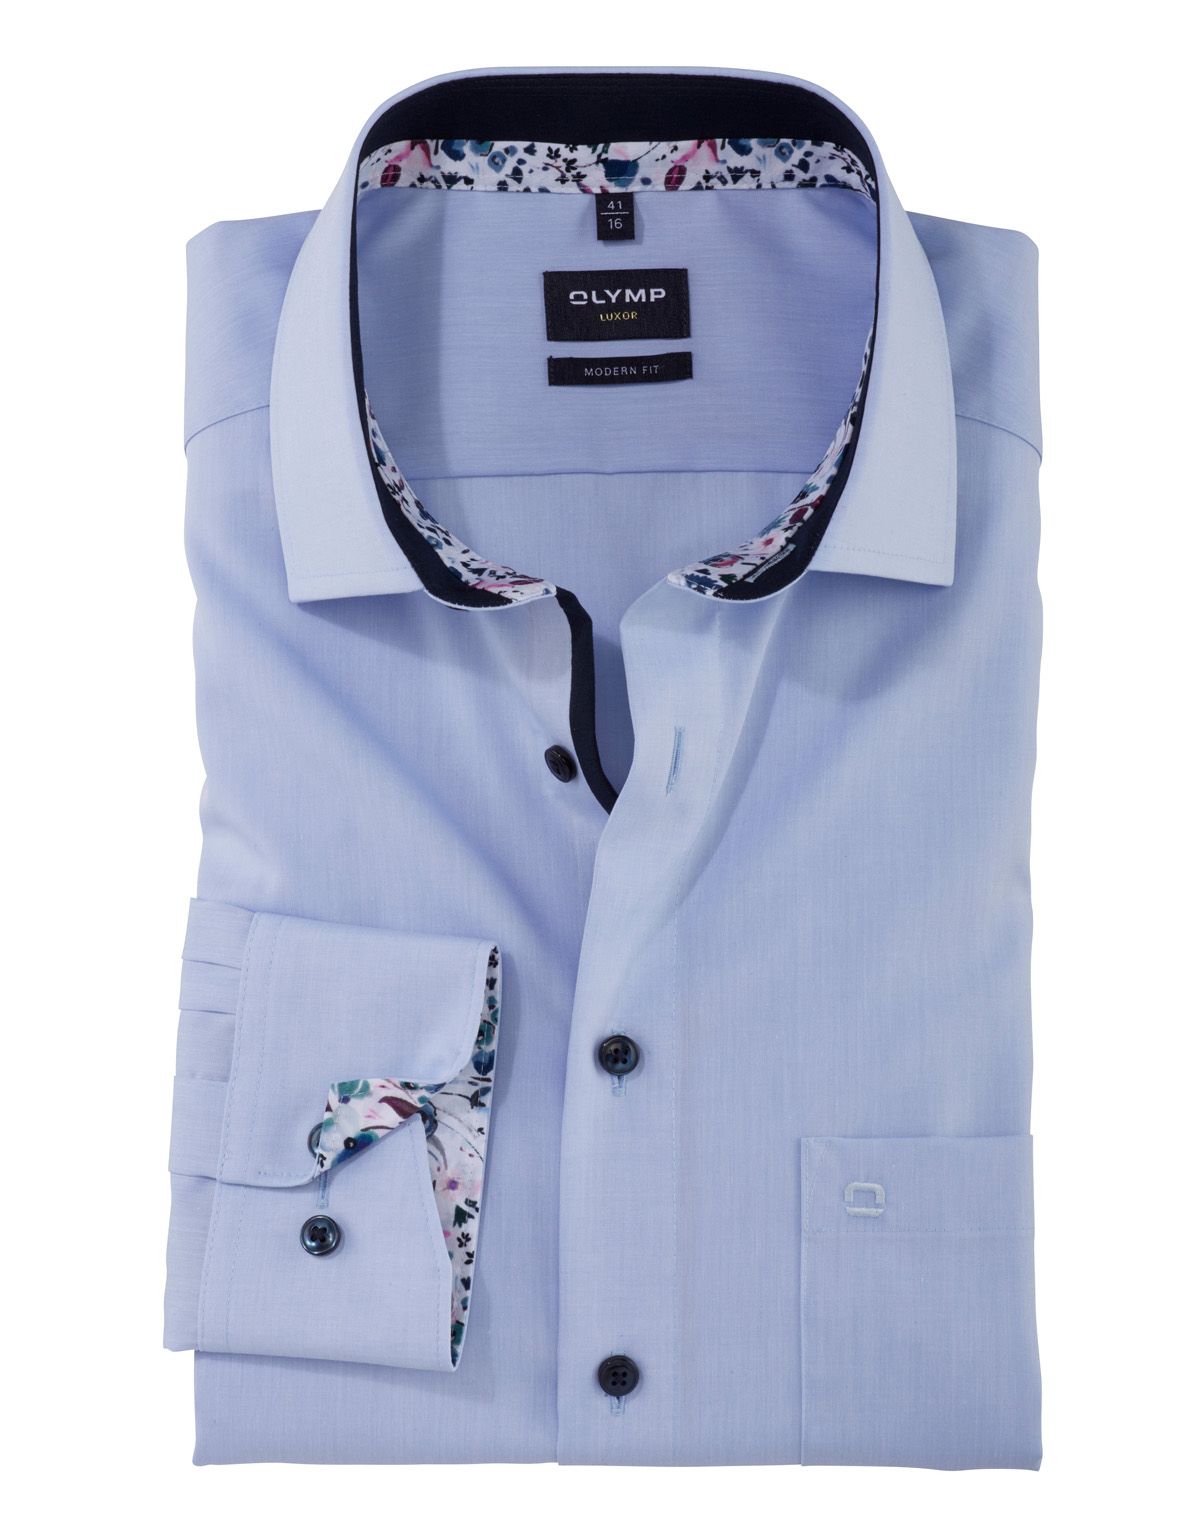 Рубашка мужская OLYMP Luxor, modern fit на рост до 176[ГОЛУБОЙ]